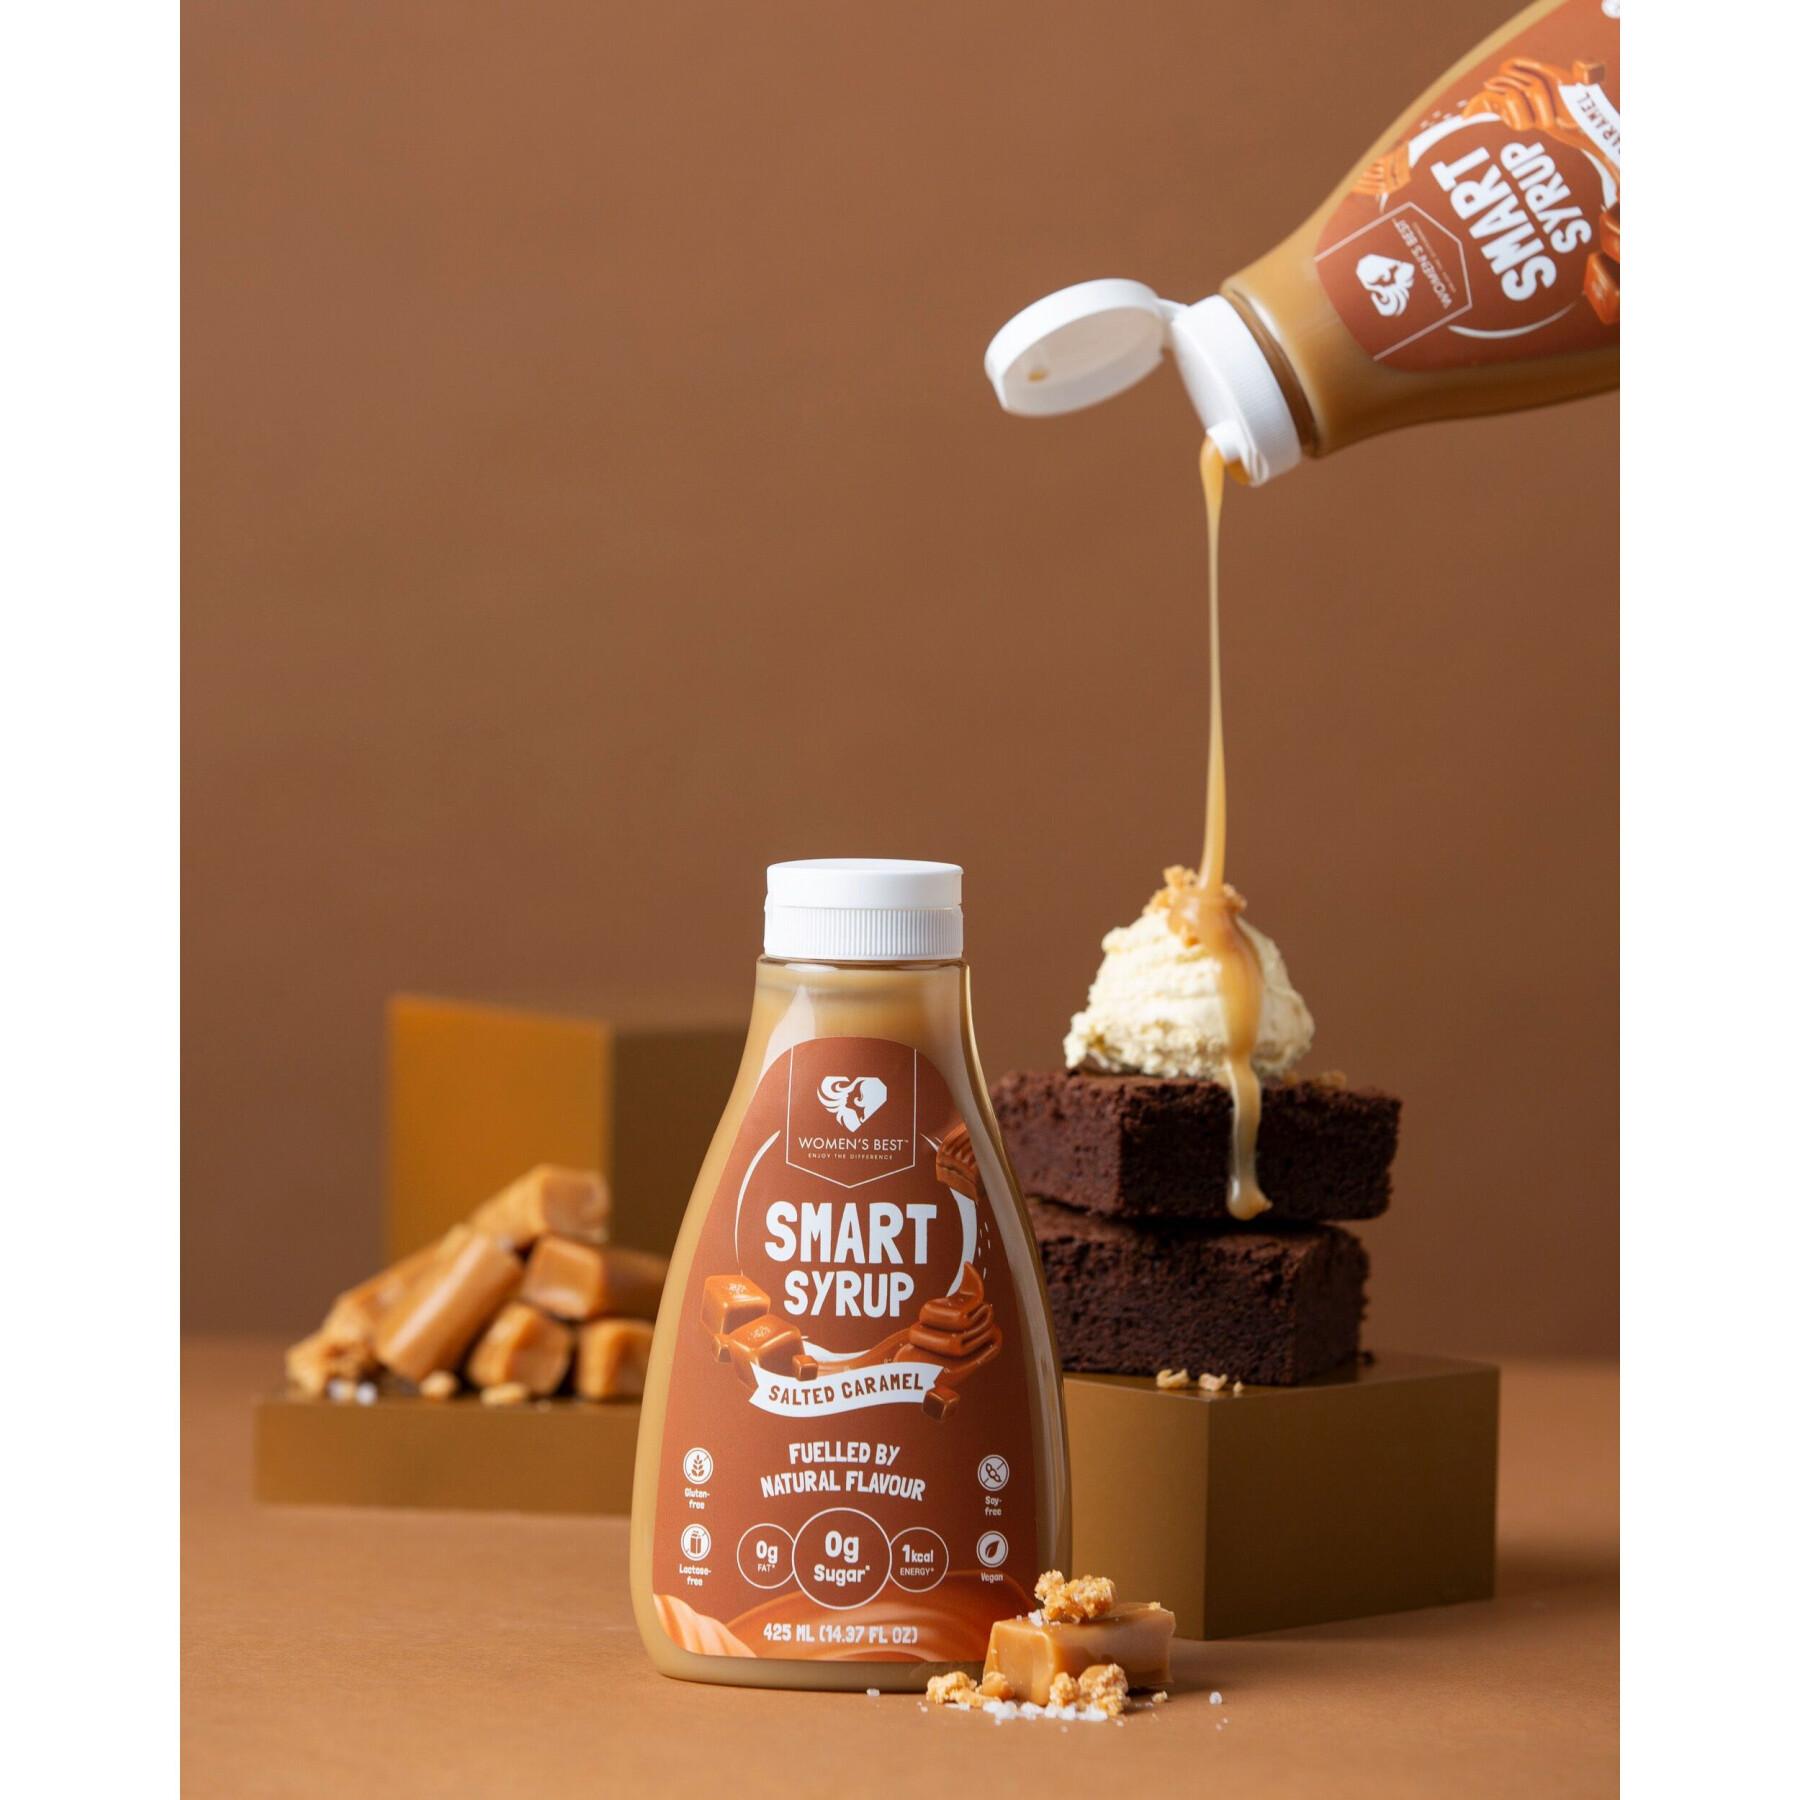 Salted caramel syrup Women's Best Smart 425 ml